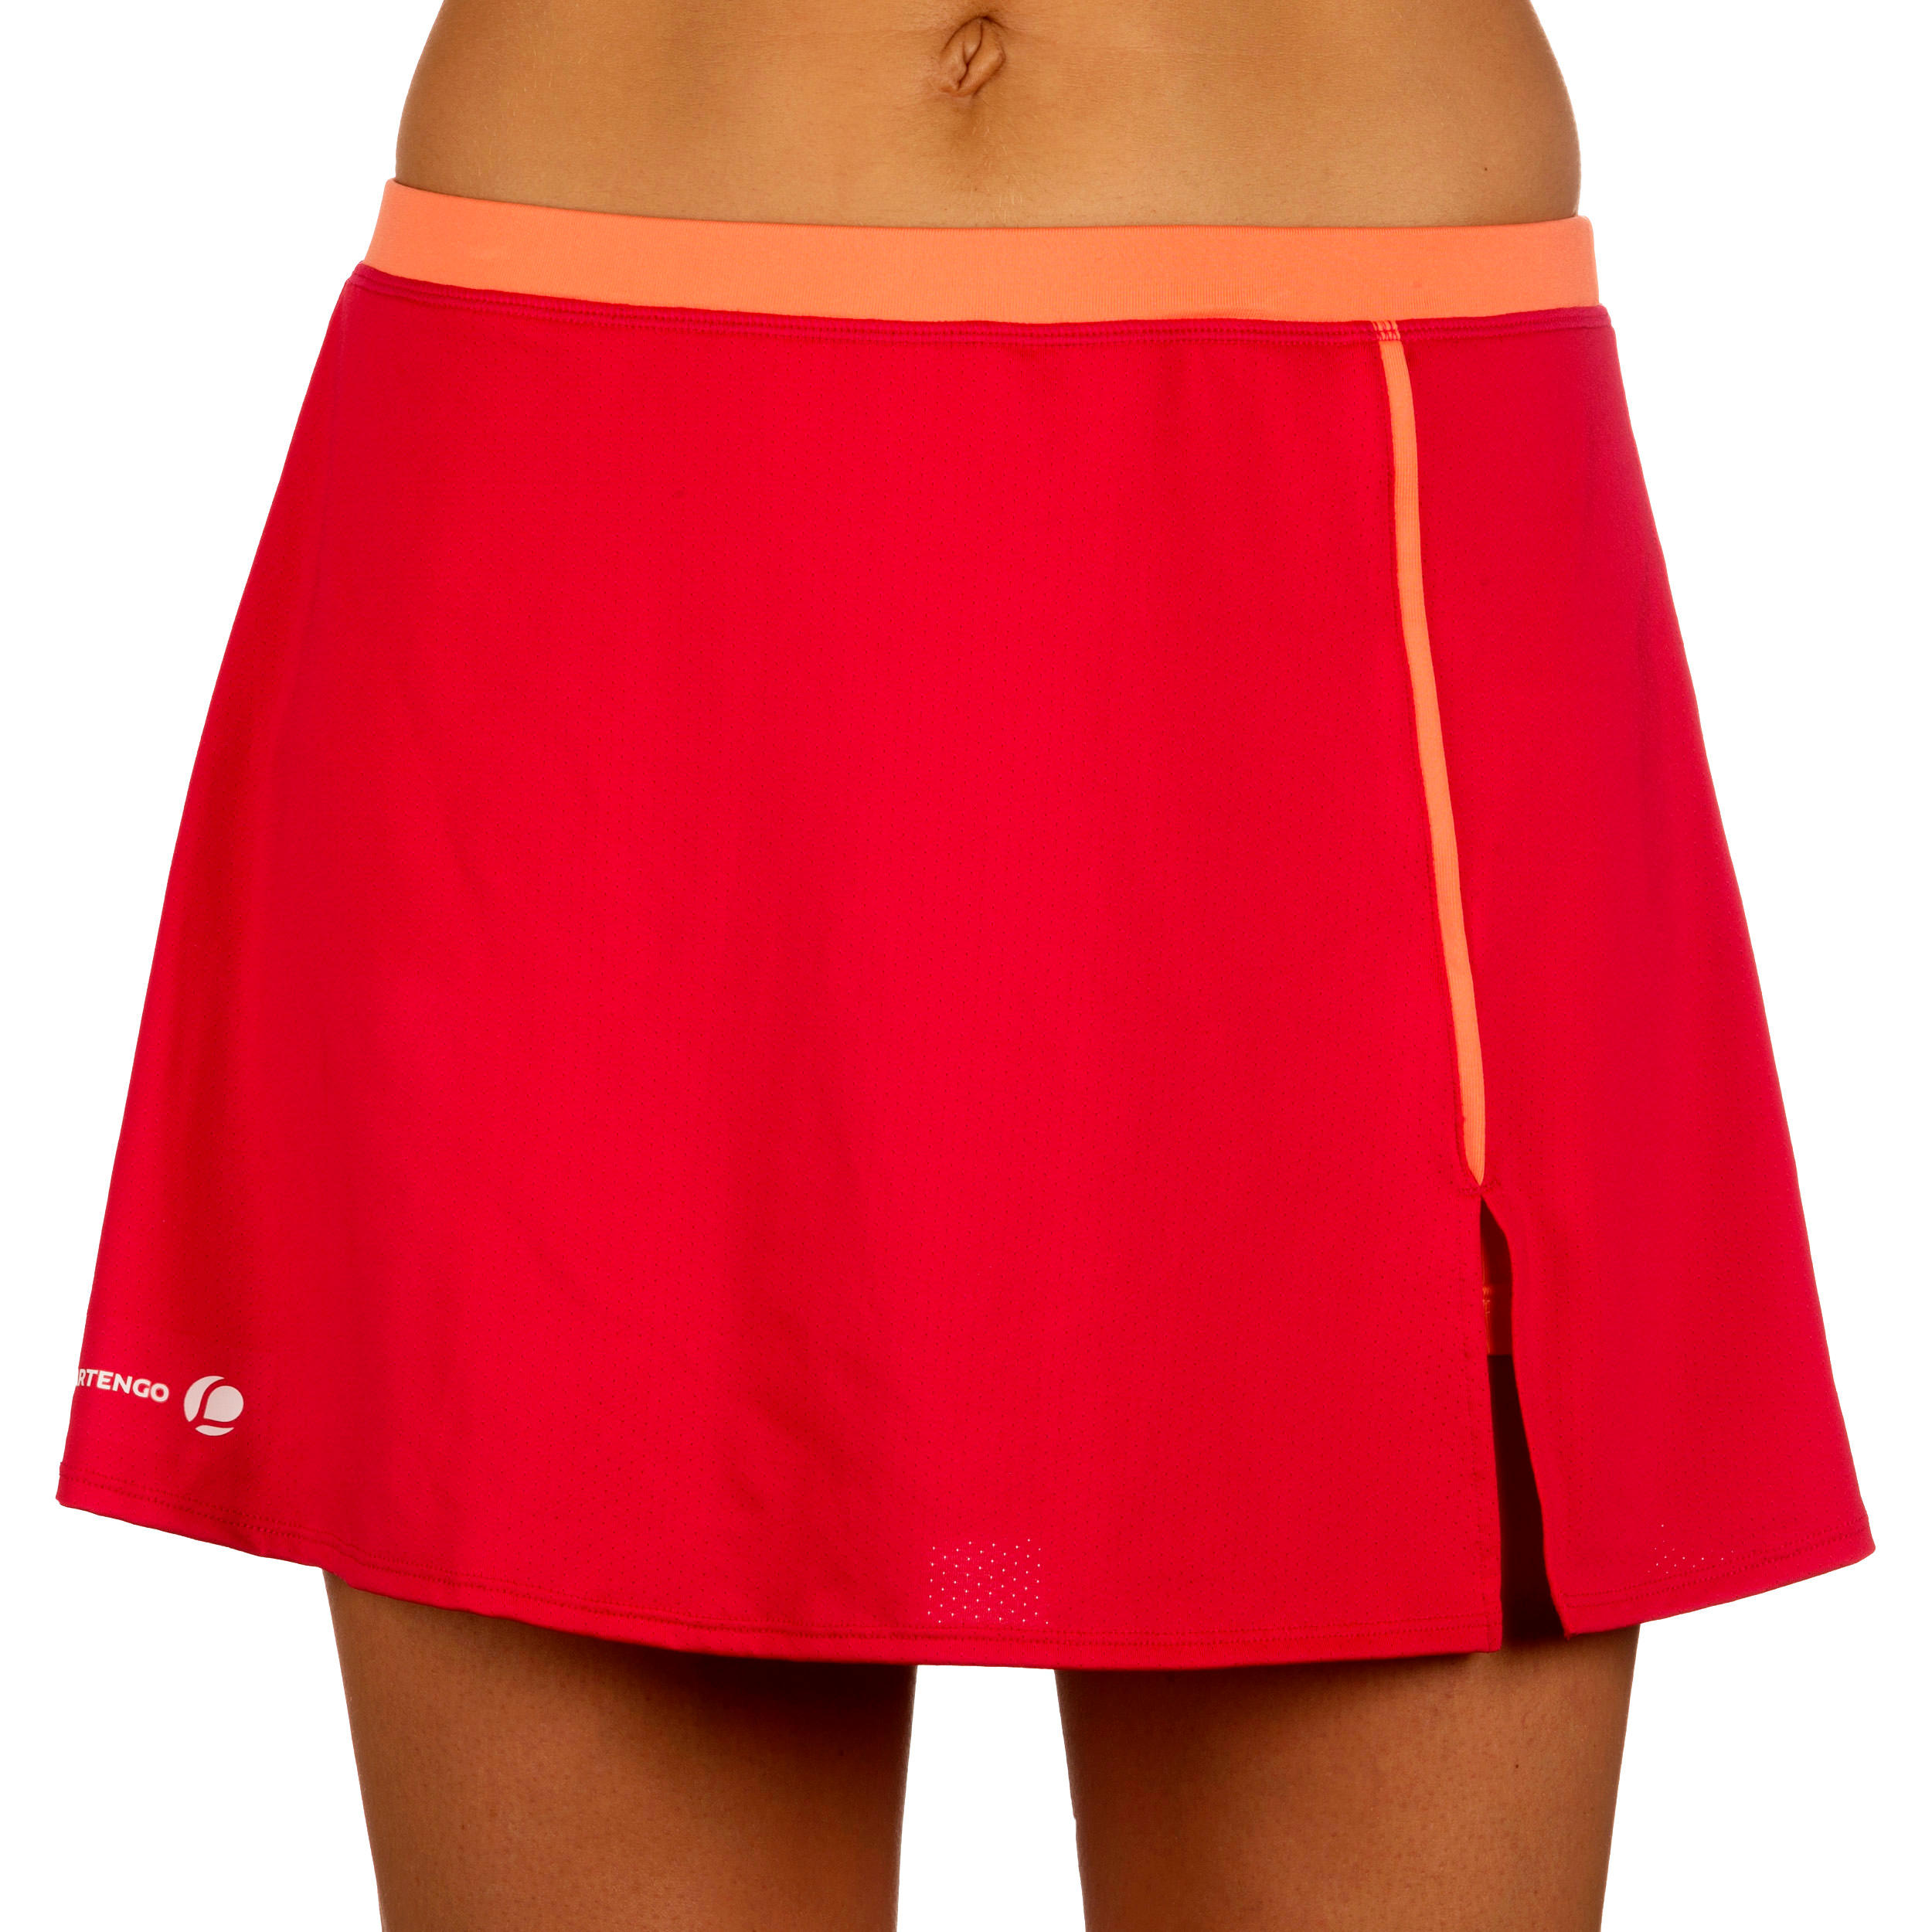 ARTENGO Soft Women's Tennis Badminton Table Tennis Squash Padel Skirt - Pink/Orange